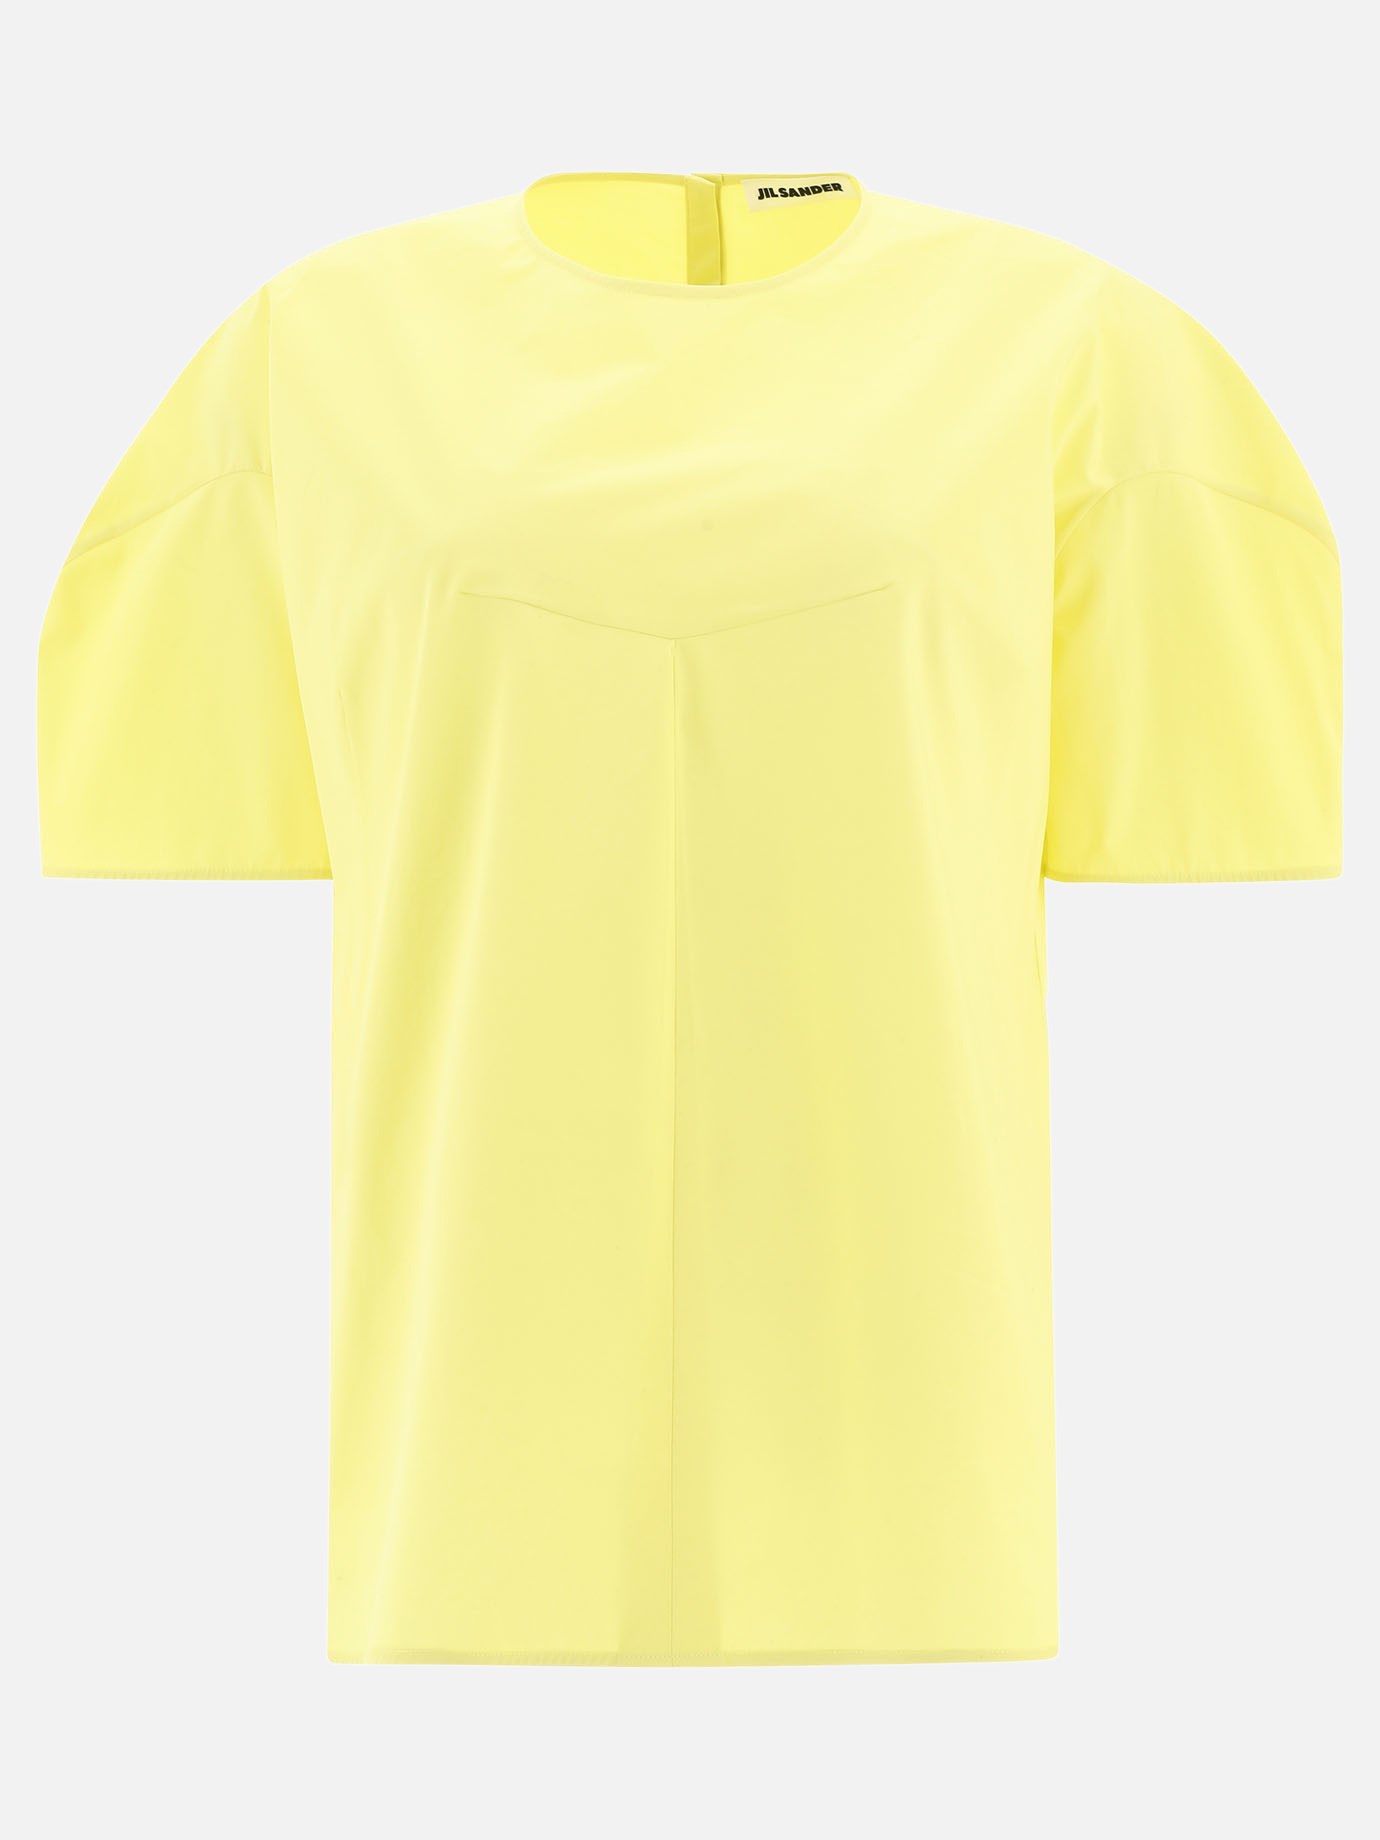 Puff sleeve t-shirtby Jil Sander - 2